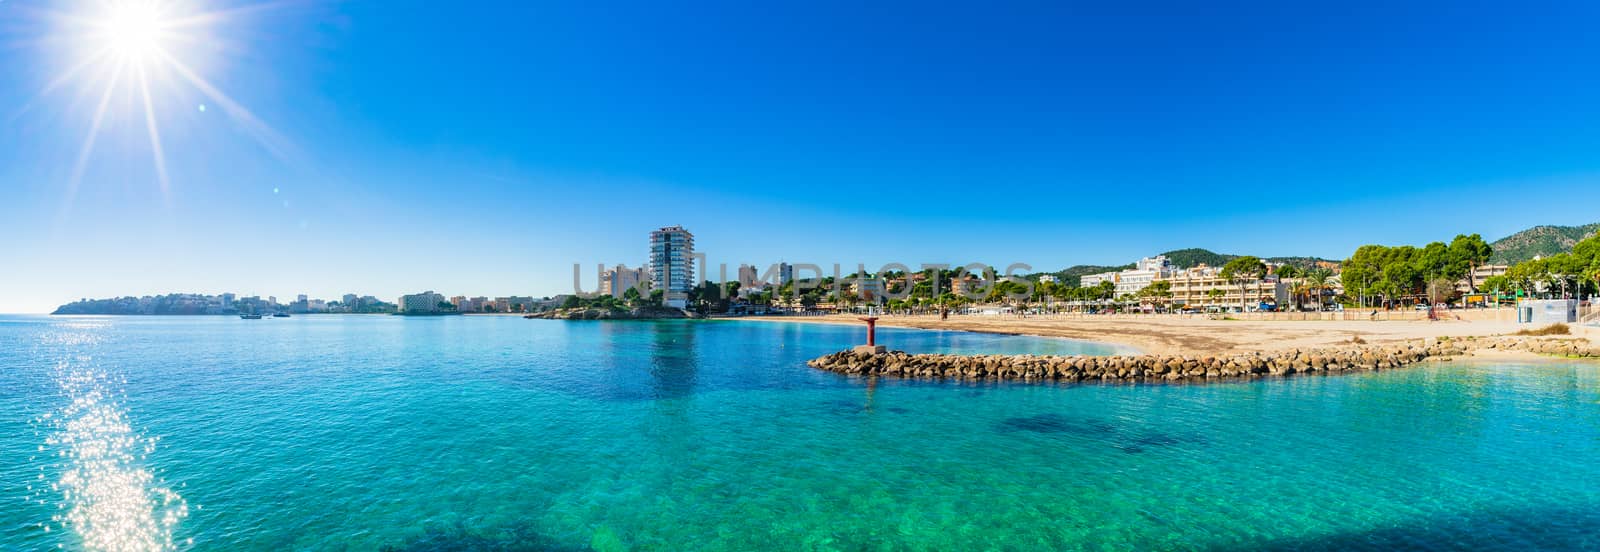 Panorama view of tourist resort beach of Platja Palmanova on Mallorca island, Spain Mediterranean Sea